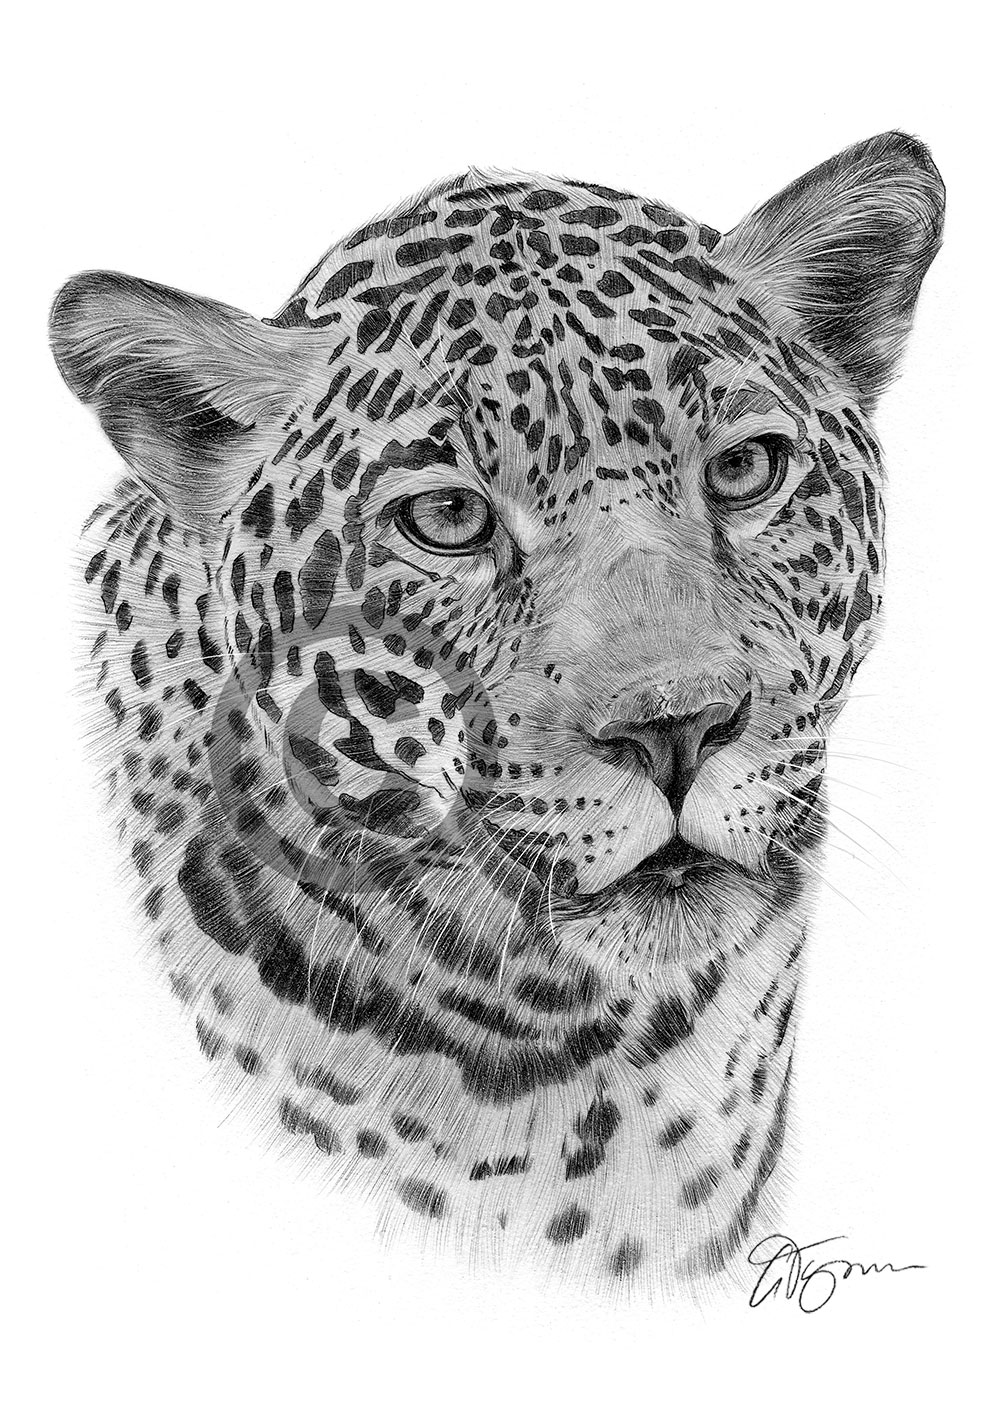 Pencil drawing of a jaguar by artist Gary Tymon